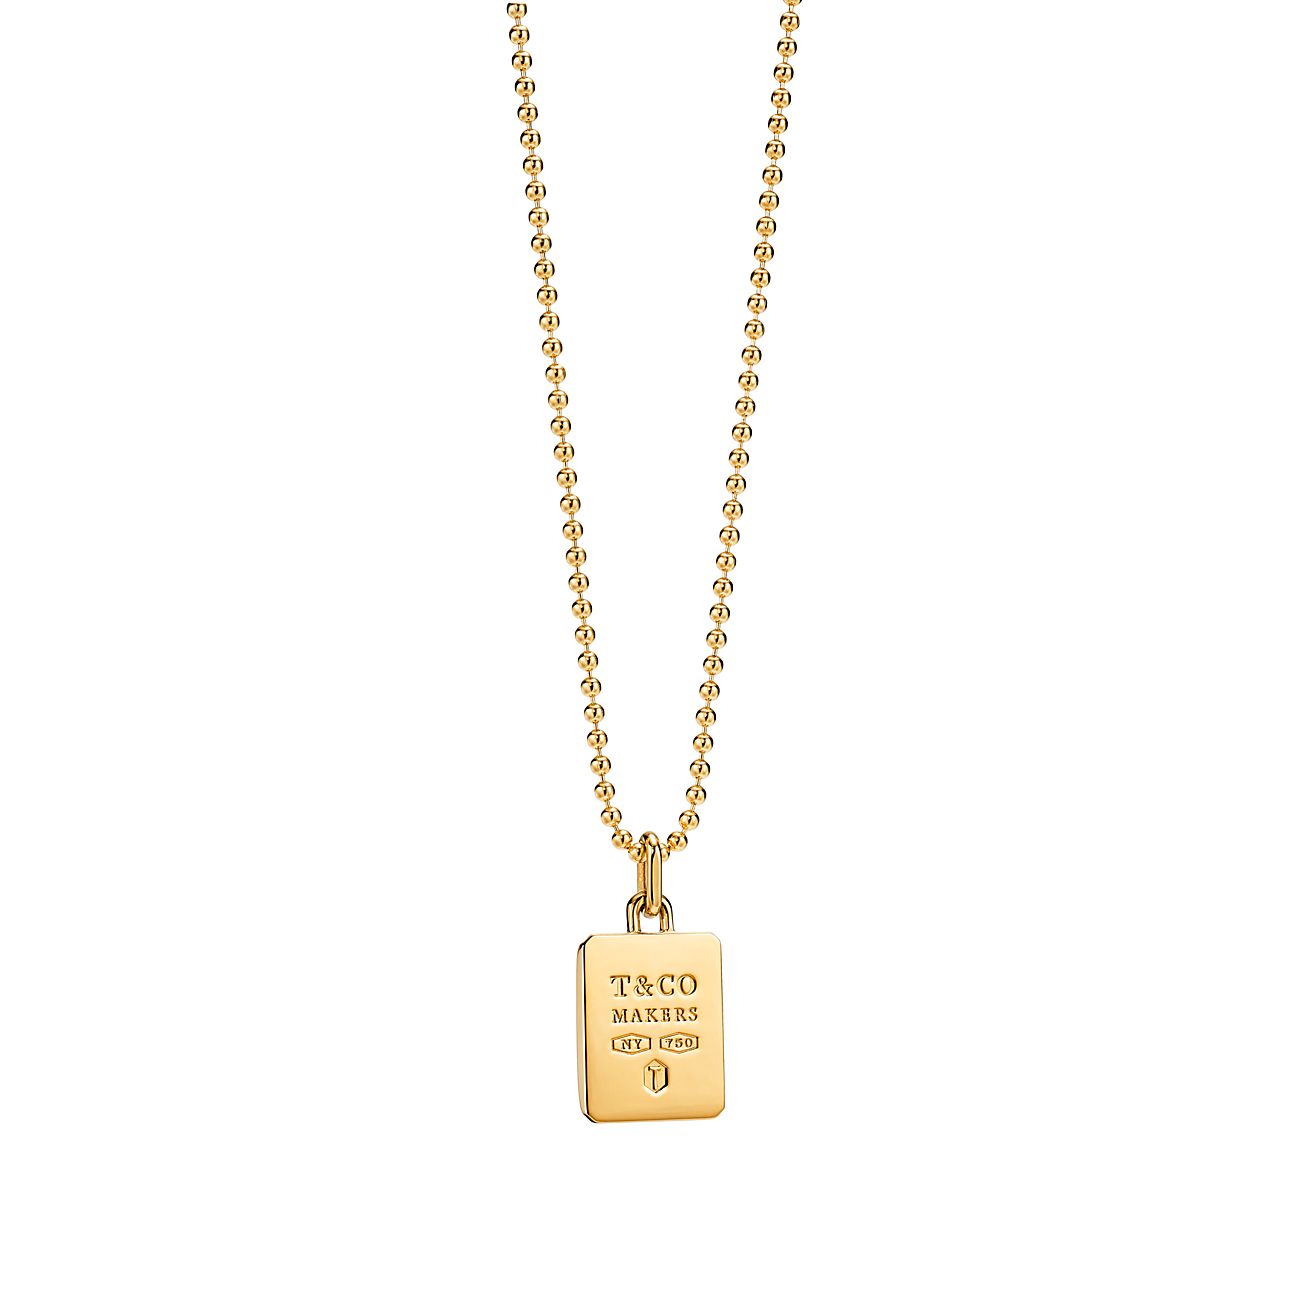 Makers square pendant in 18k gold, 24 